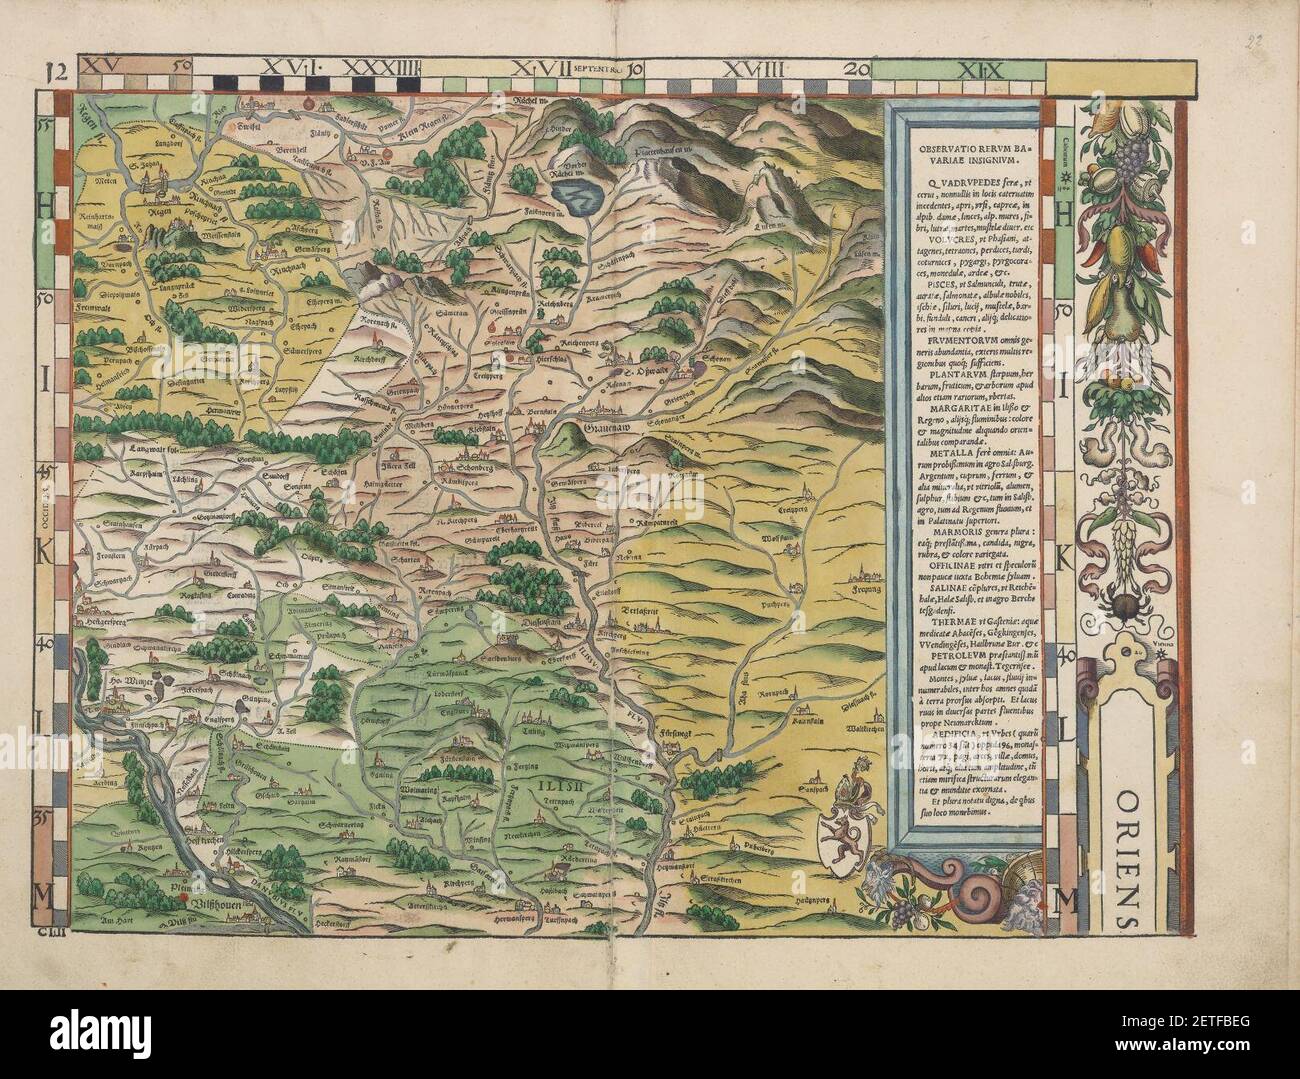 Philipp Apian - Bairische Landtafeln von 1568 - Tafel 12. Foto Stock